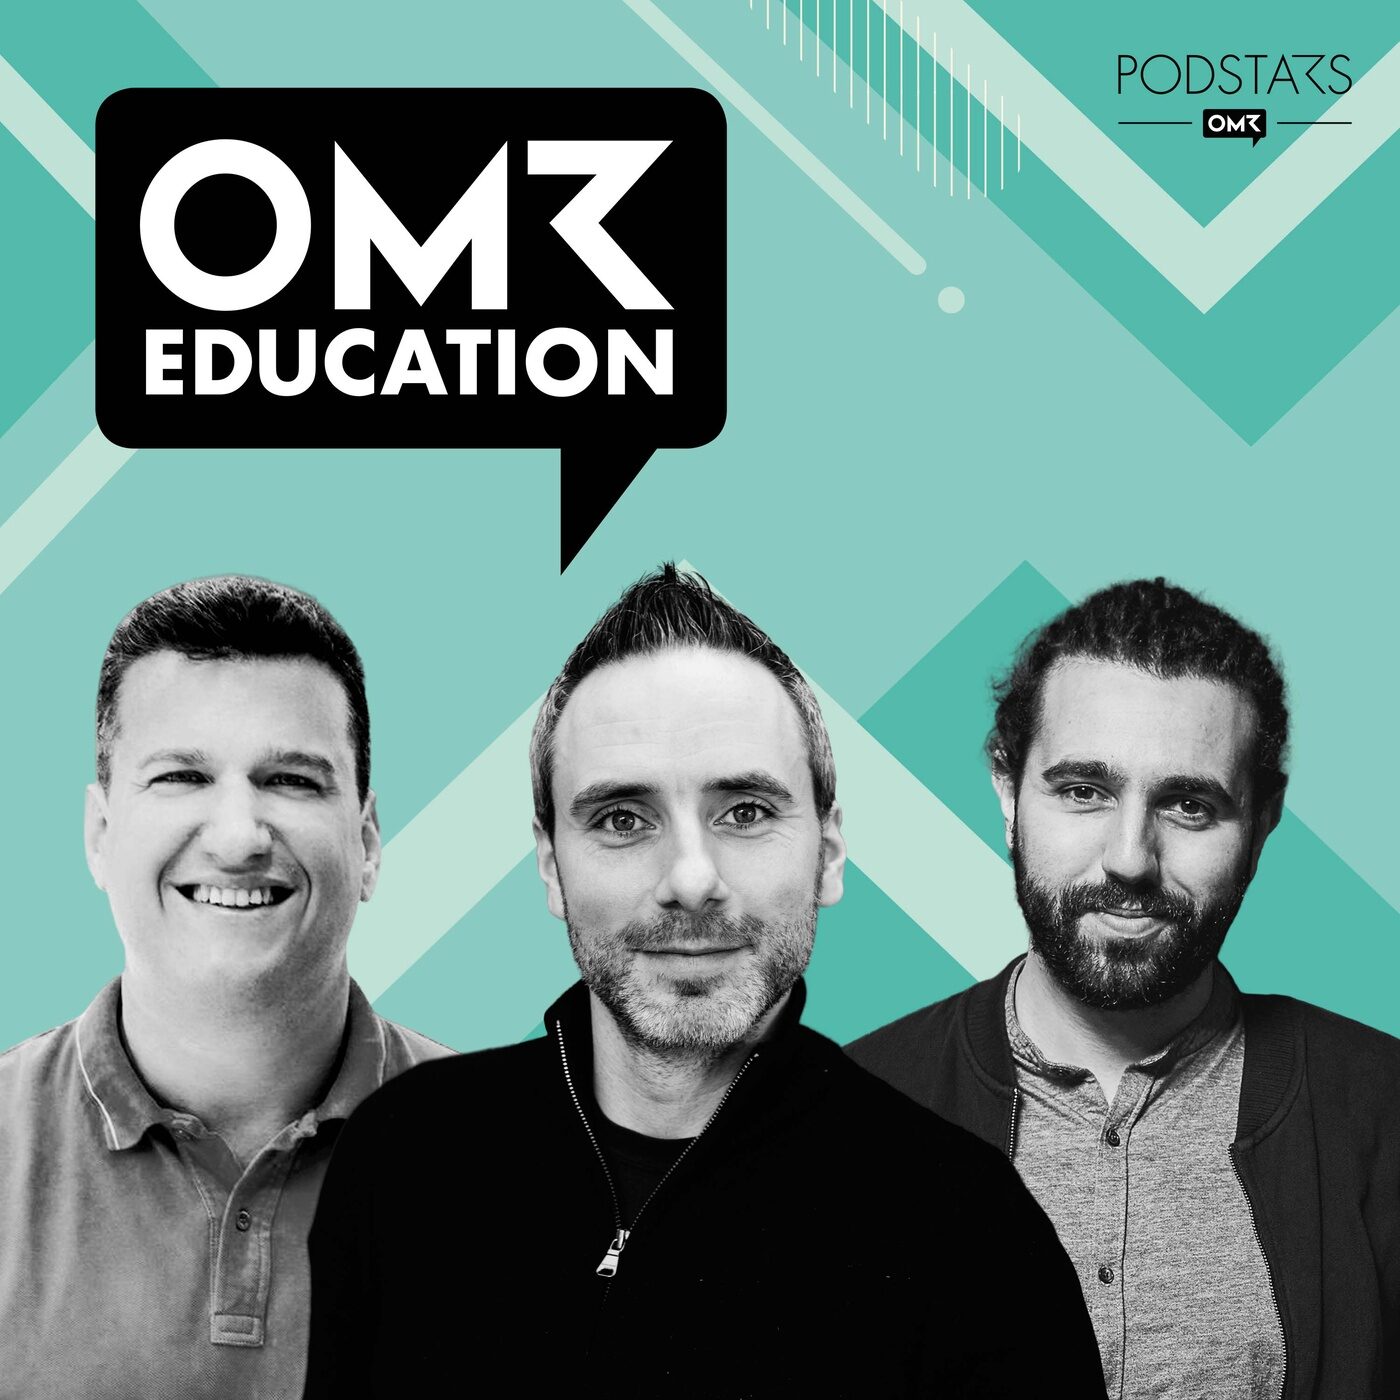 Podcast OMR Education